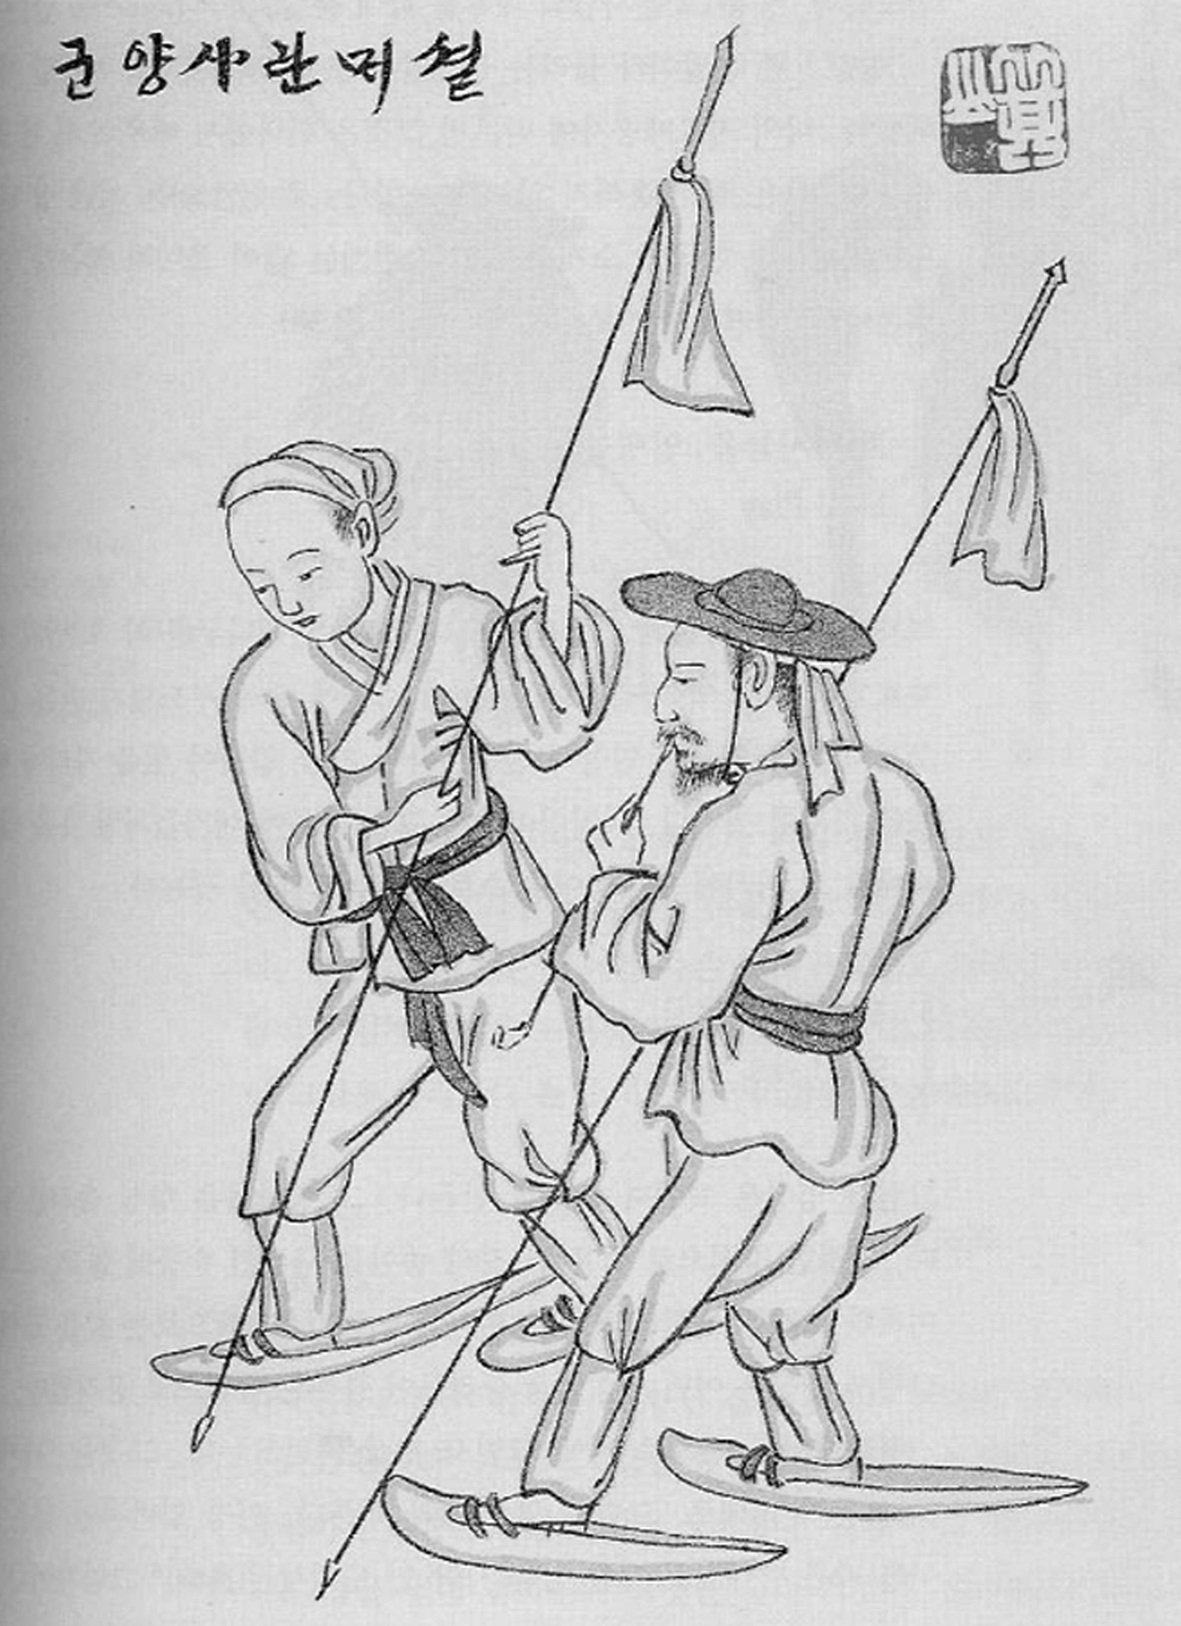 Hunters riding sledge (Korean Games P. 53, Fig. 29).